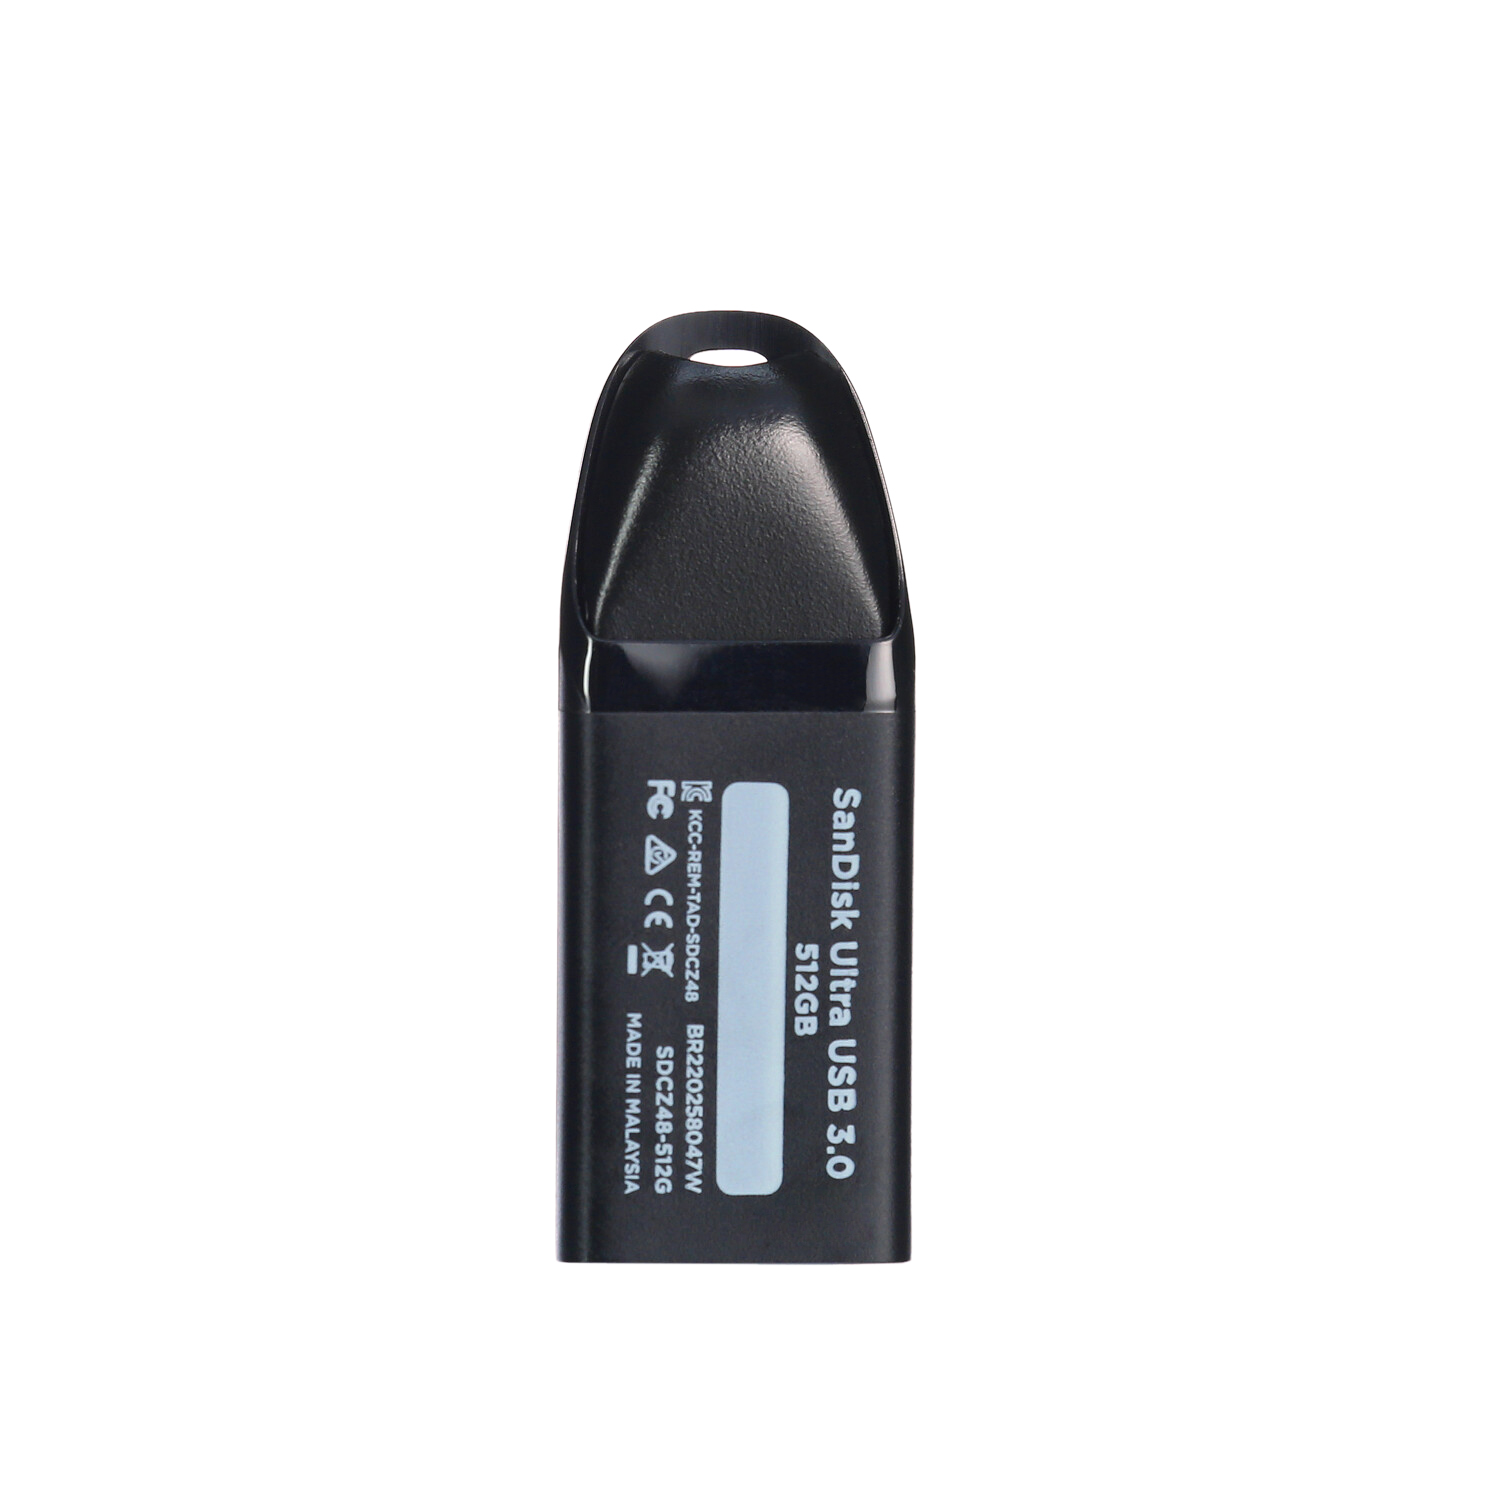 SanDisk 512GB Ultra USB 3.0 Flash Drive - 130MB/s - SDCZ48-512G